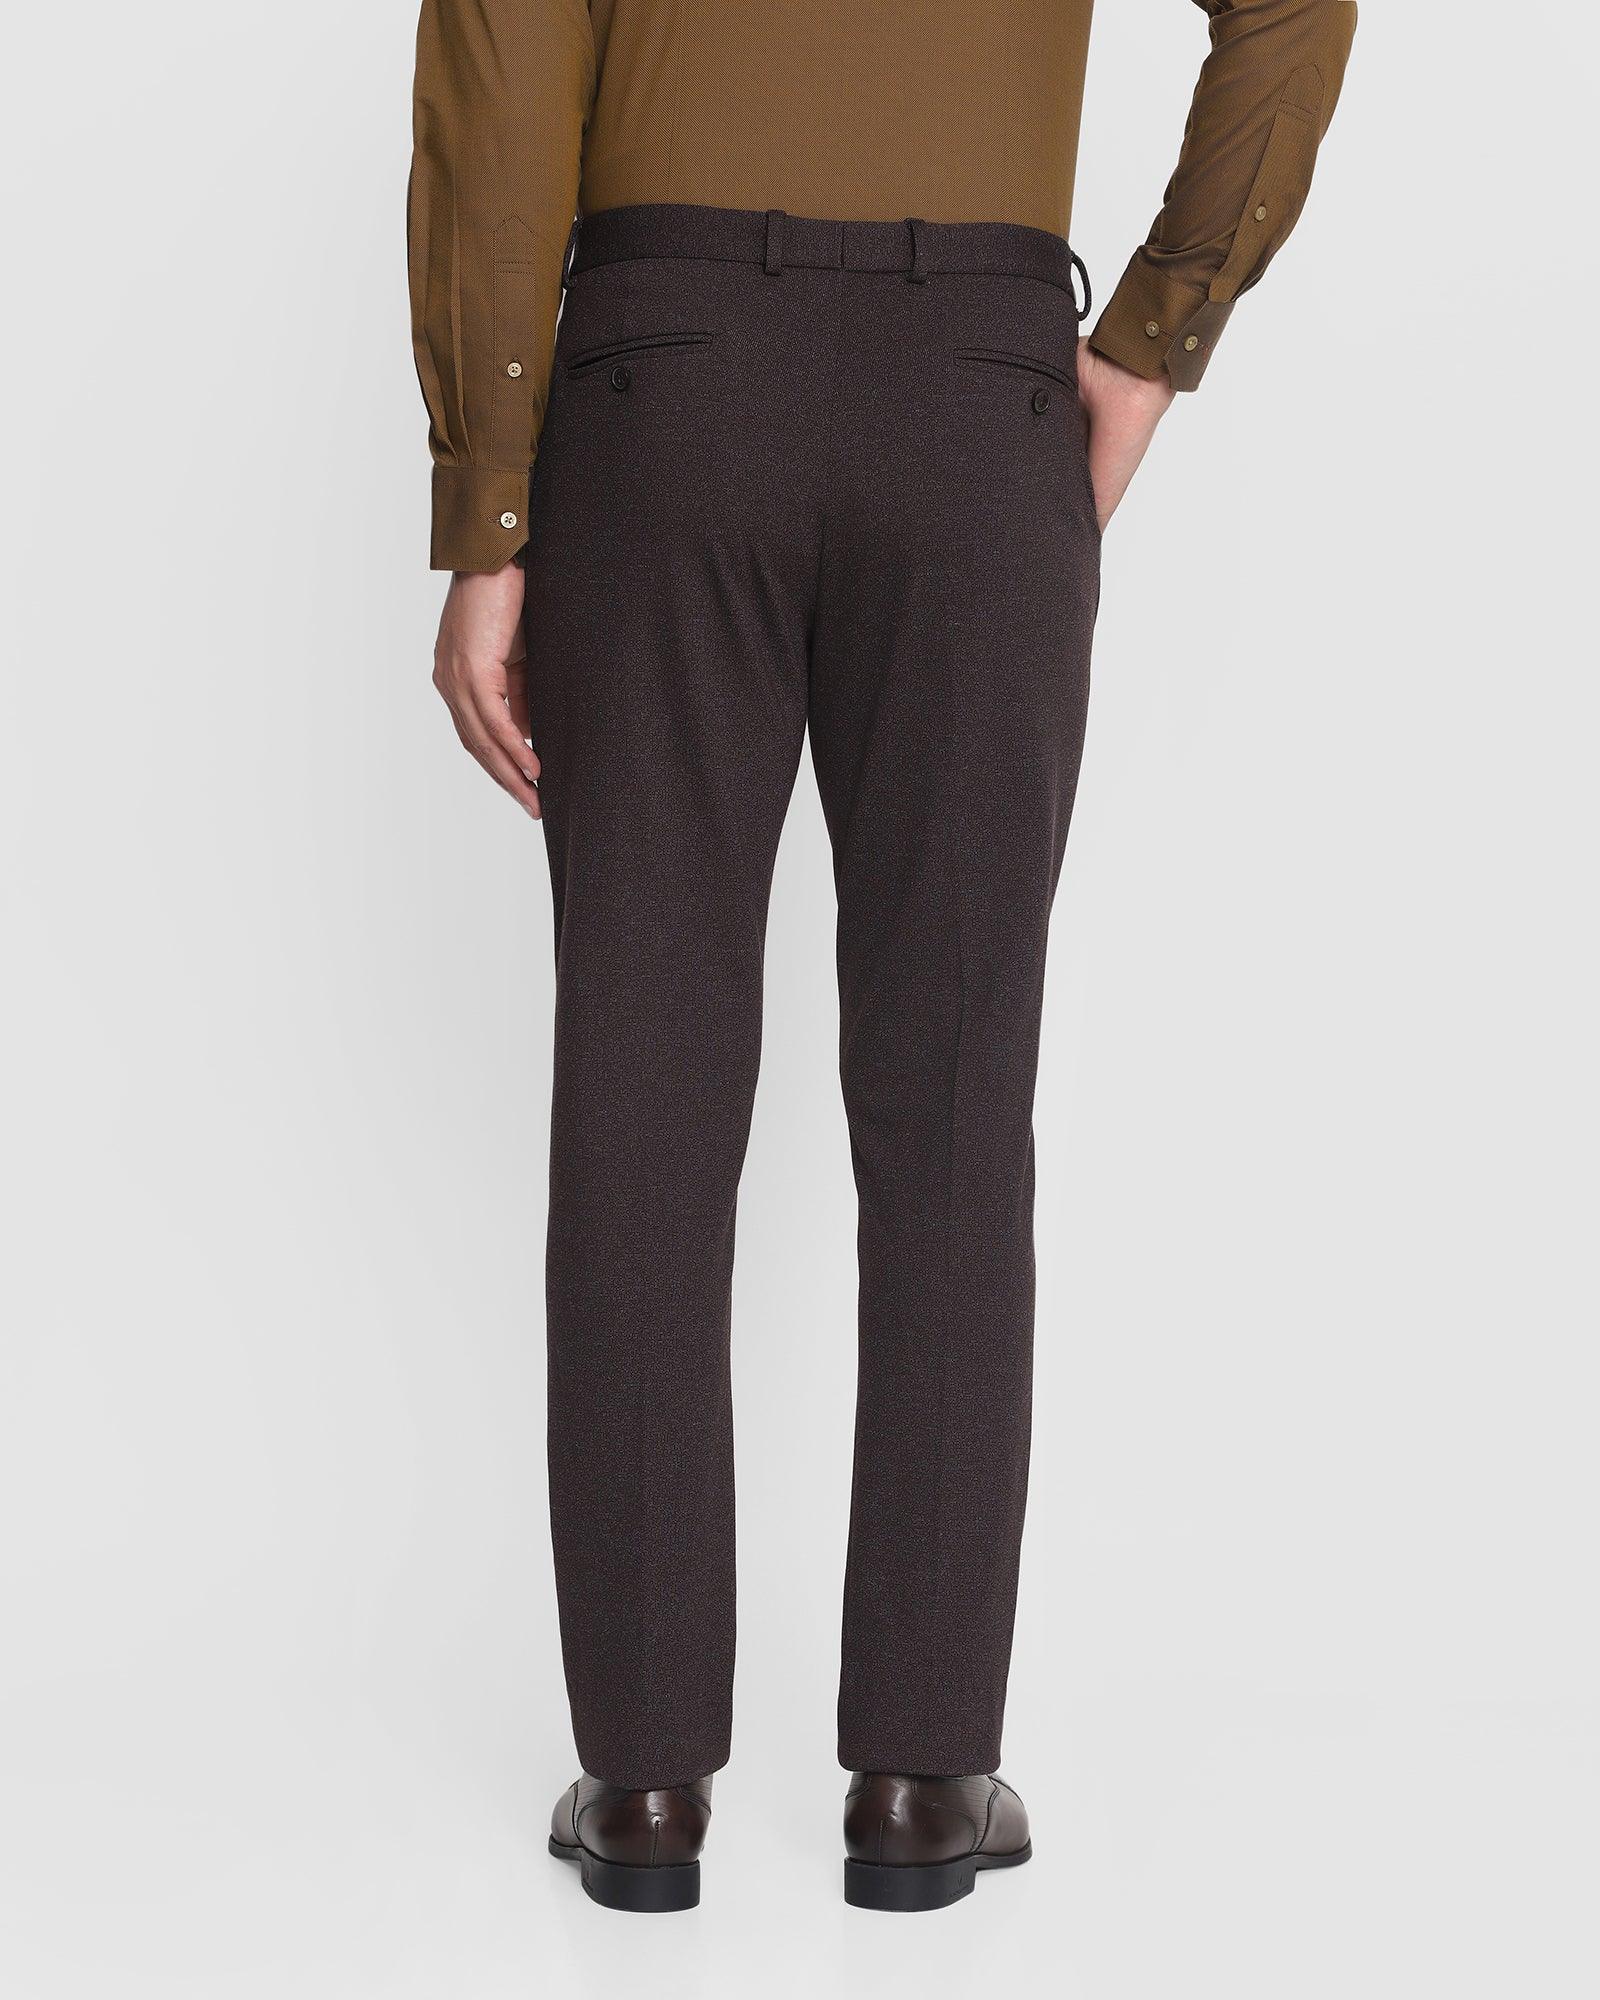 Barcelona Burgundy Wool Pants - | Hangrr | Brown cotton pants, Shop mens  clothing, Burgundy pants